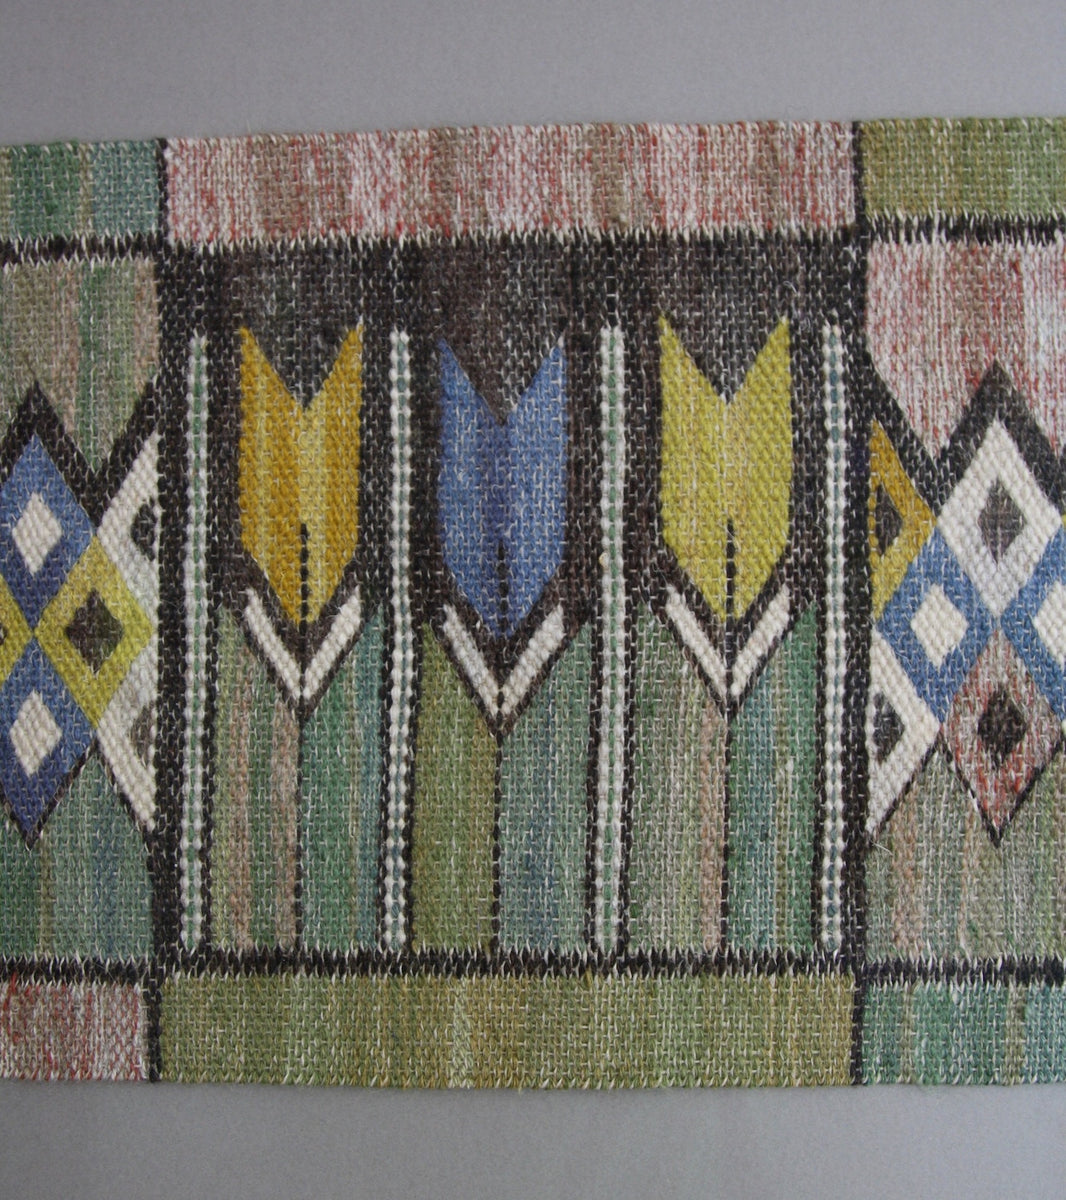 tulips patterns folklore classic design textile art art textiles swedish design 20th century design 